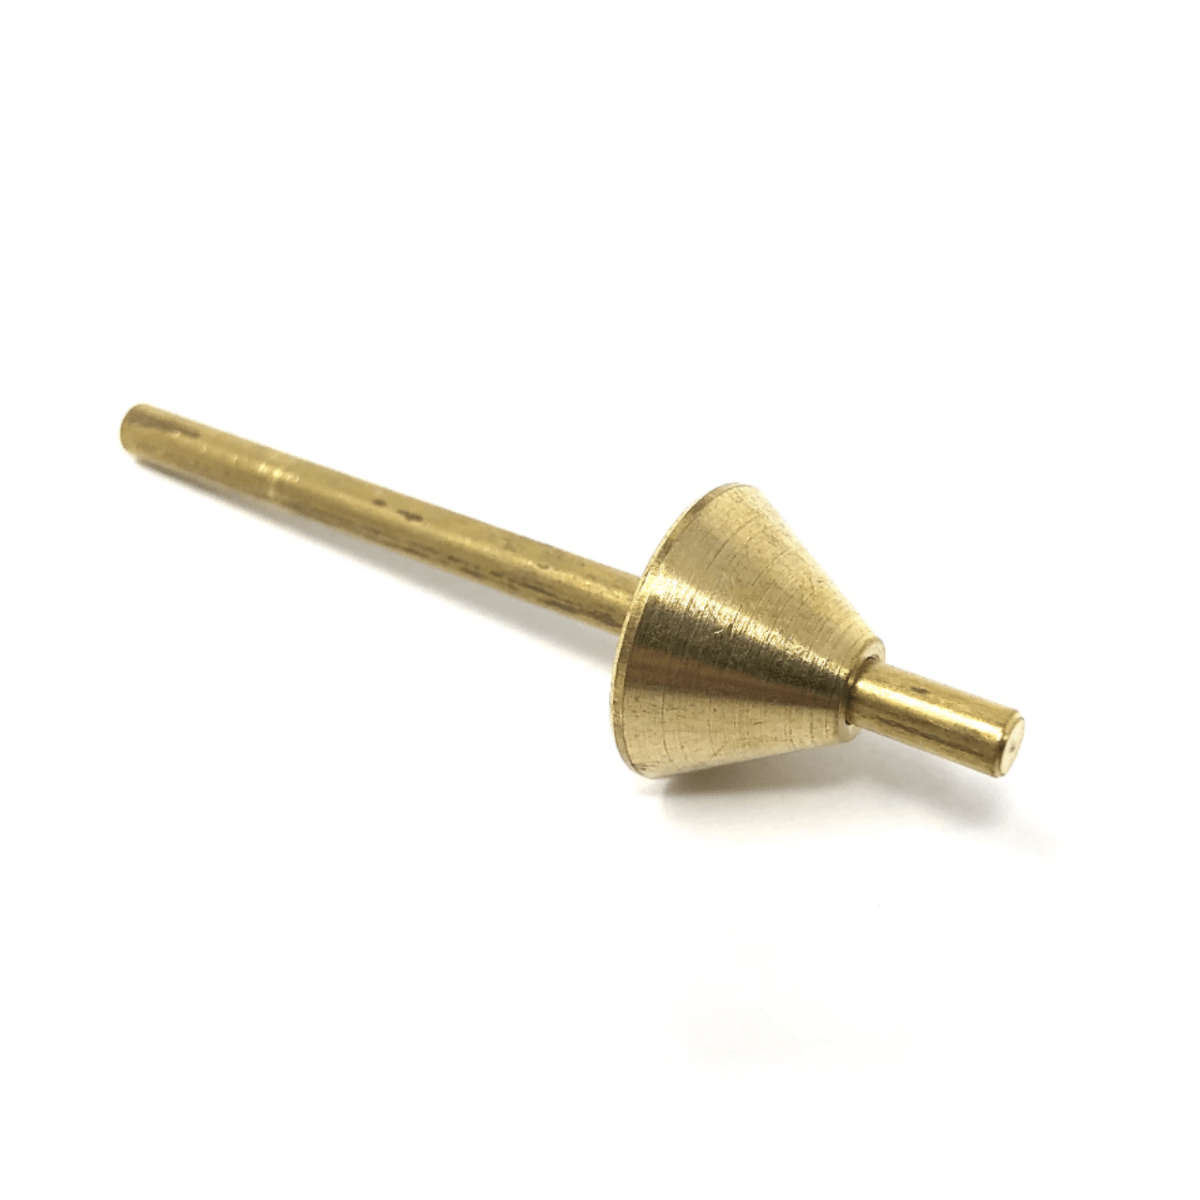 Brass Sprue Forming Mandrel Tool Sand Casting Wax Jewellery Making 194556588985 - Maddisons UK